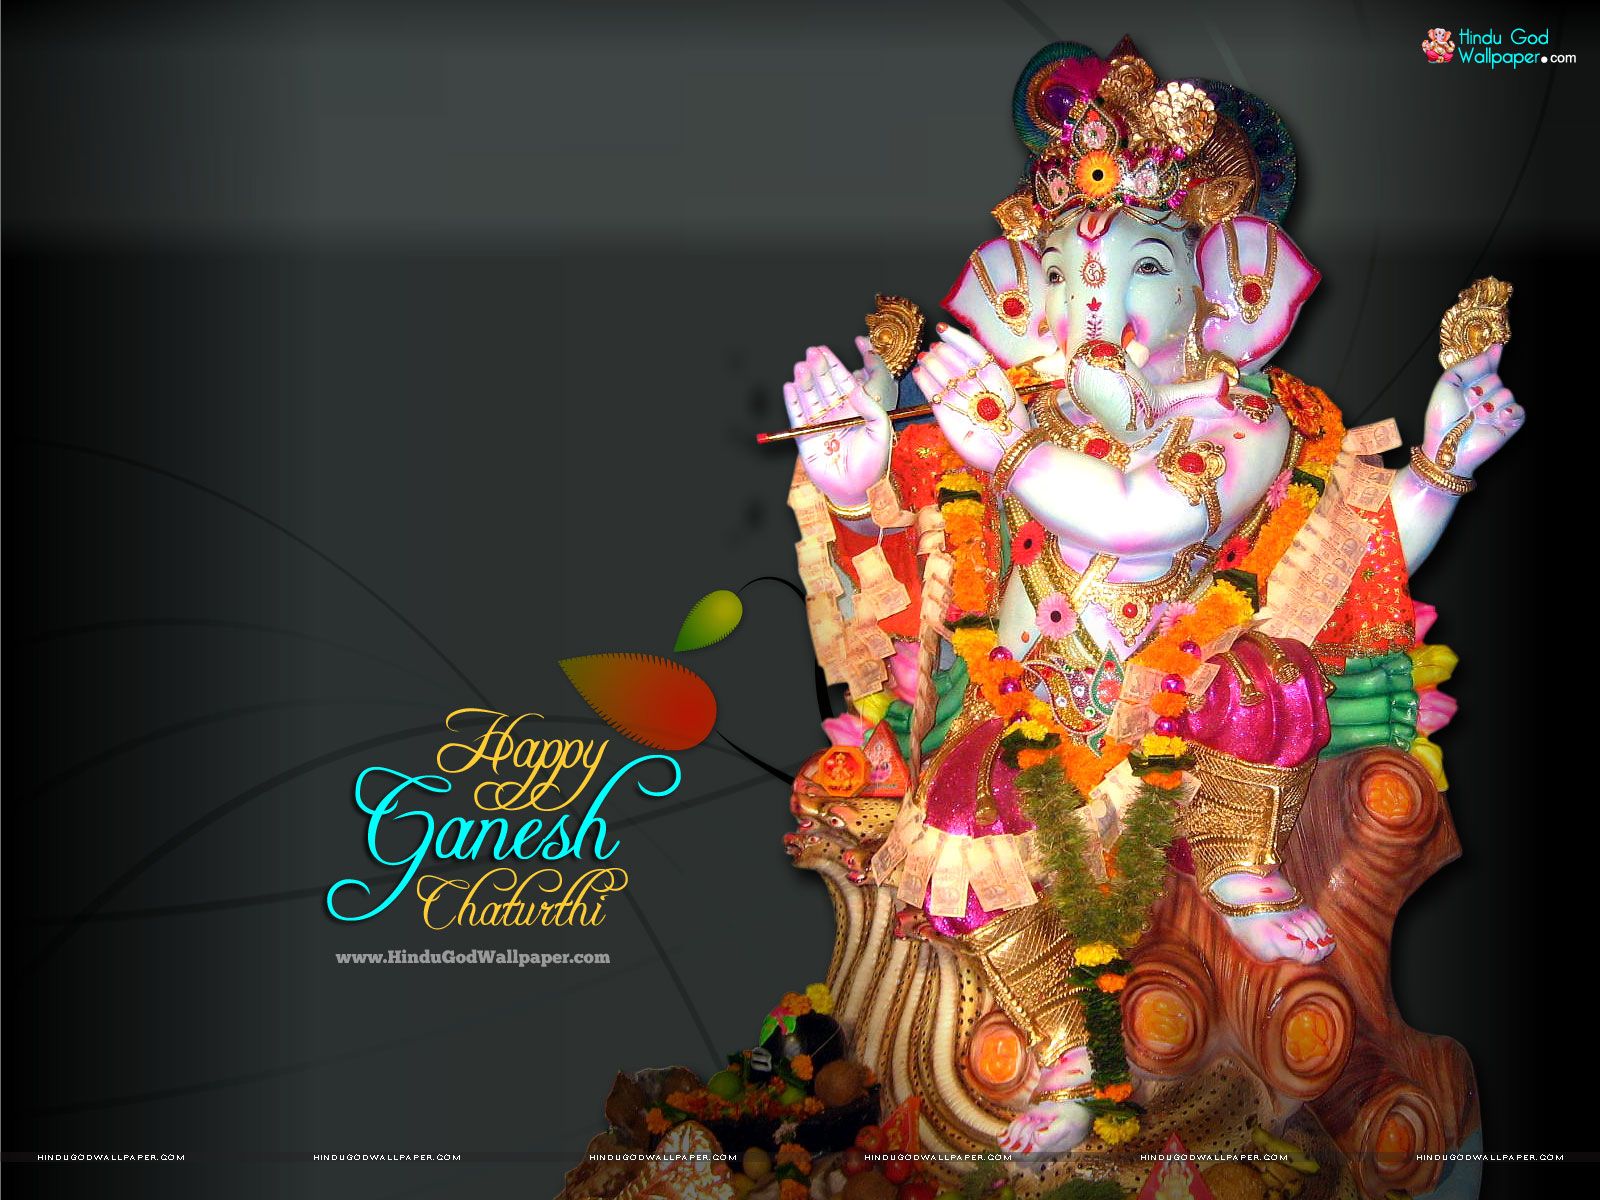 Ganesh Chaturthi Images Hd - 1600x1200 Wallpaper 